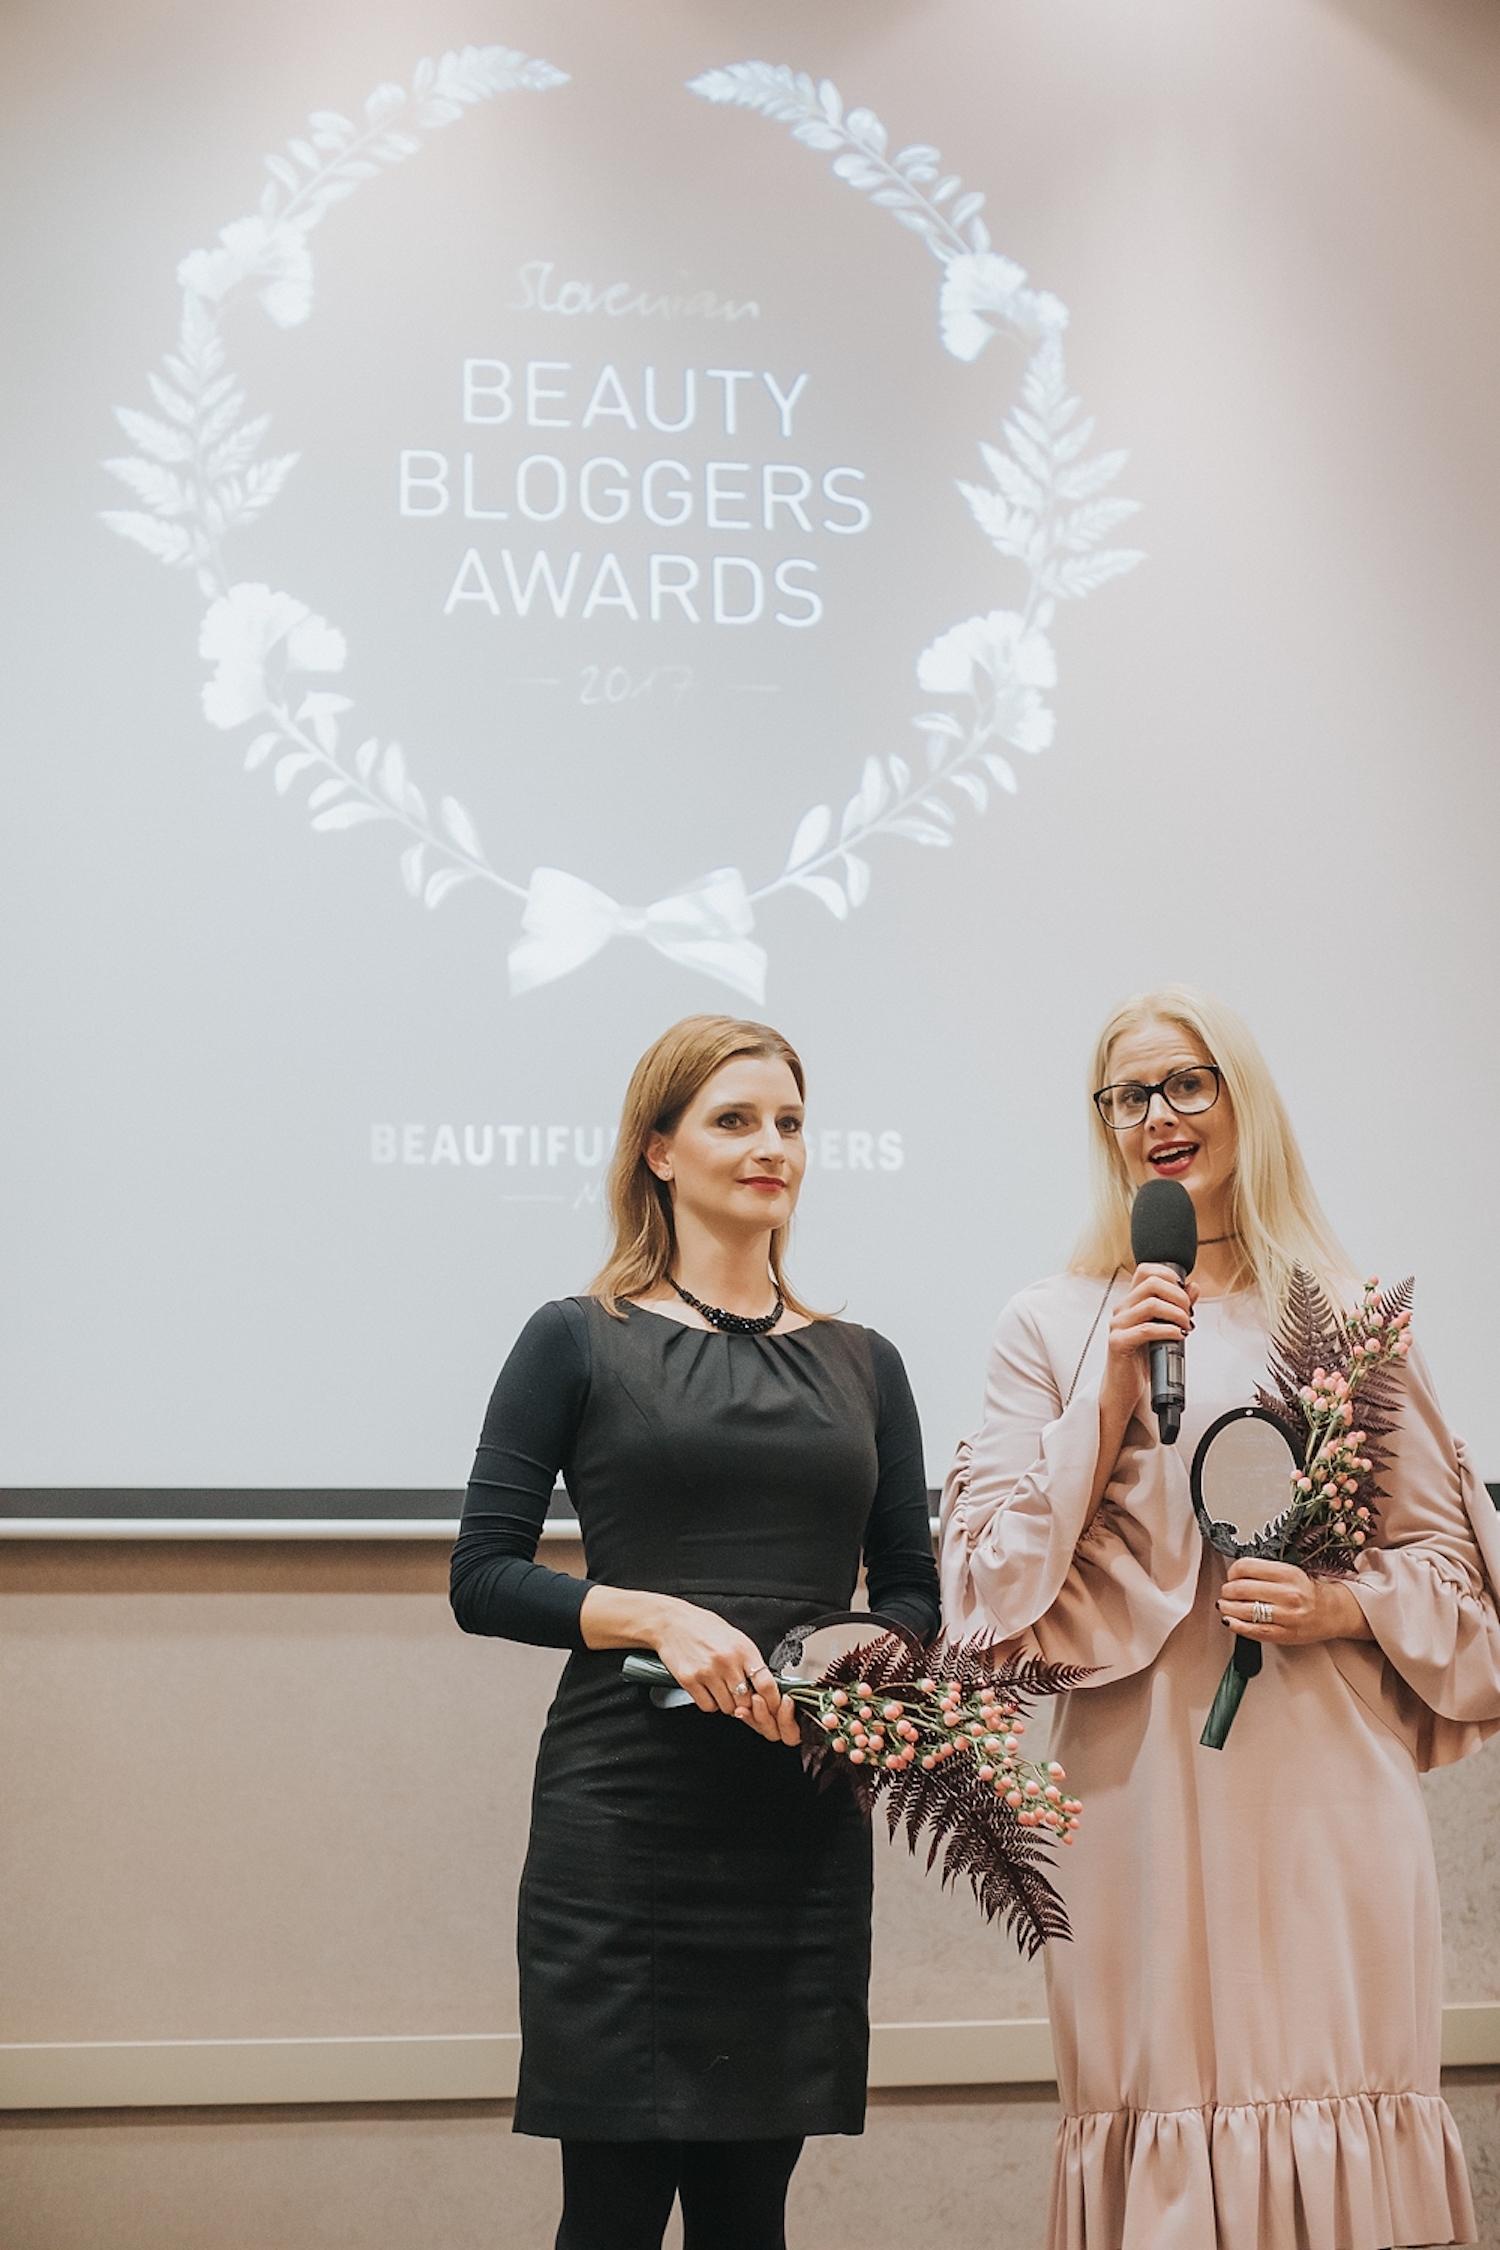 Nagrade lepotnih blogerk Beauti Bloggers Awards 2017 Beautyfullblog stillmark Kristina skrlj tina berlot